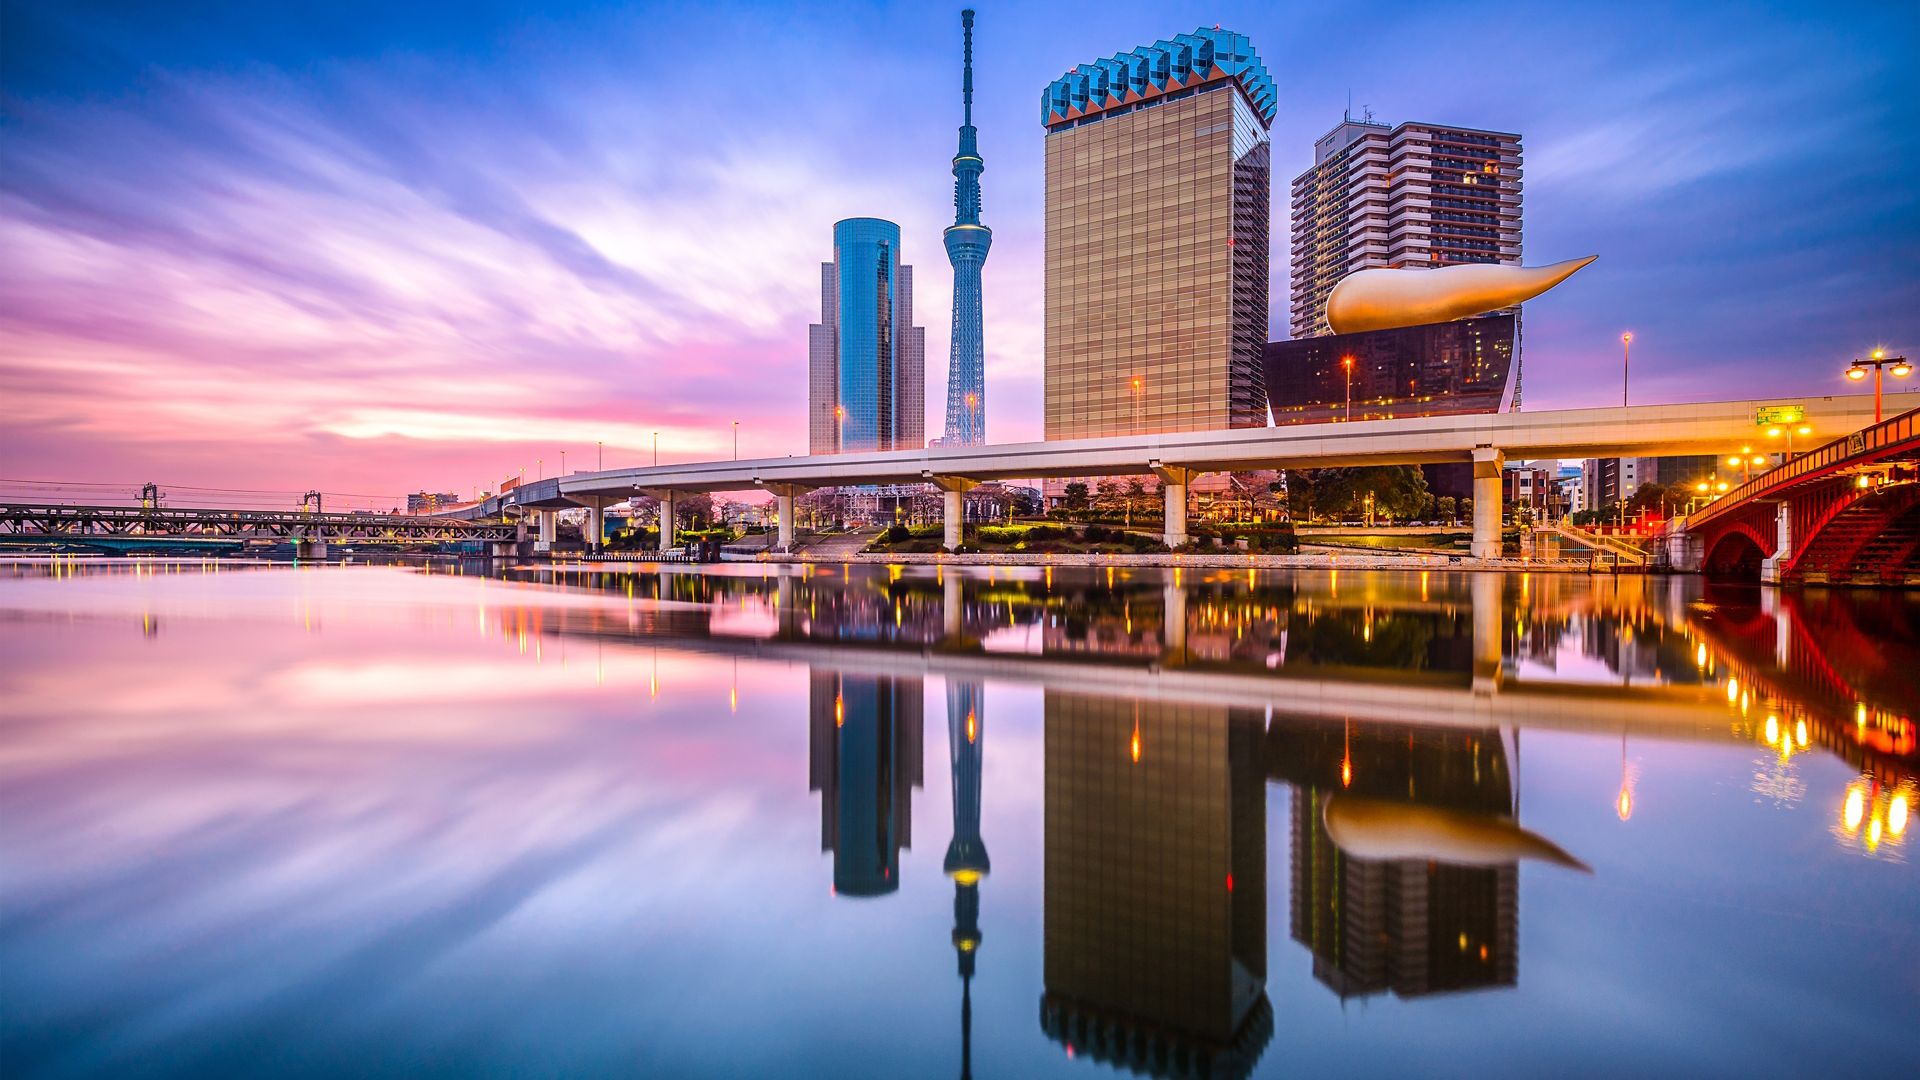 Skyline on the Sumida River in Tokyo, Japan